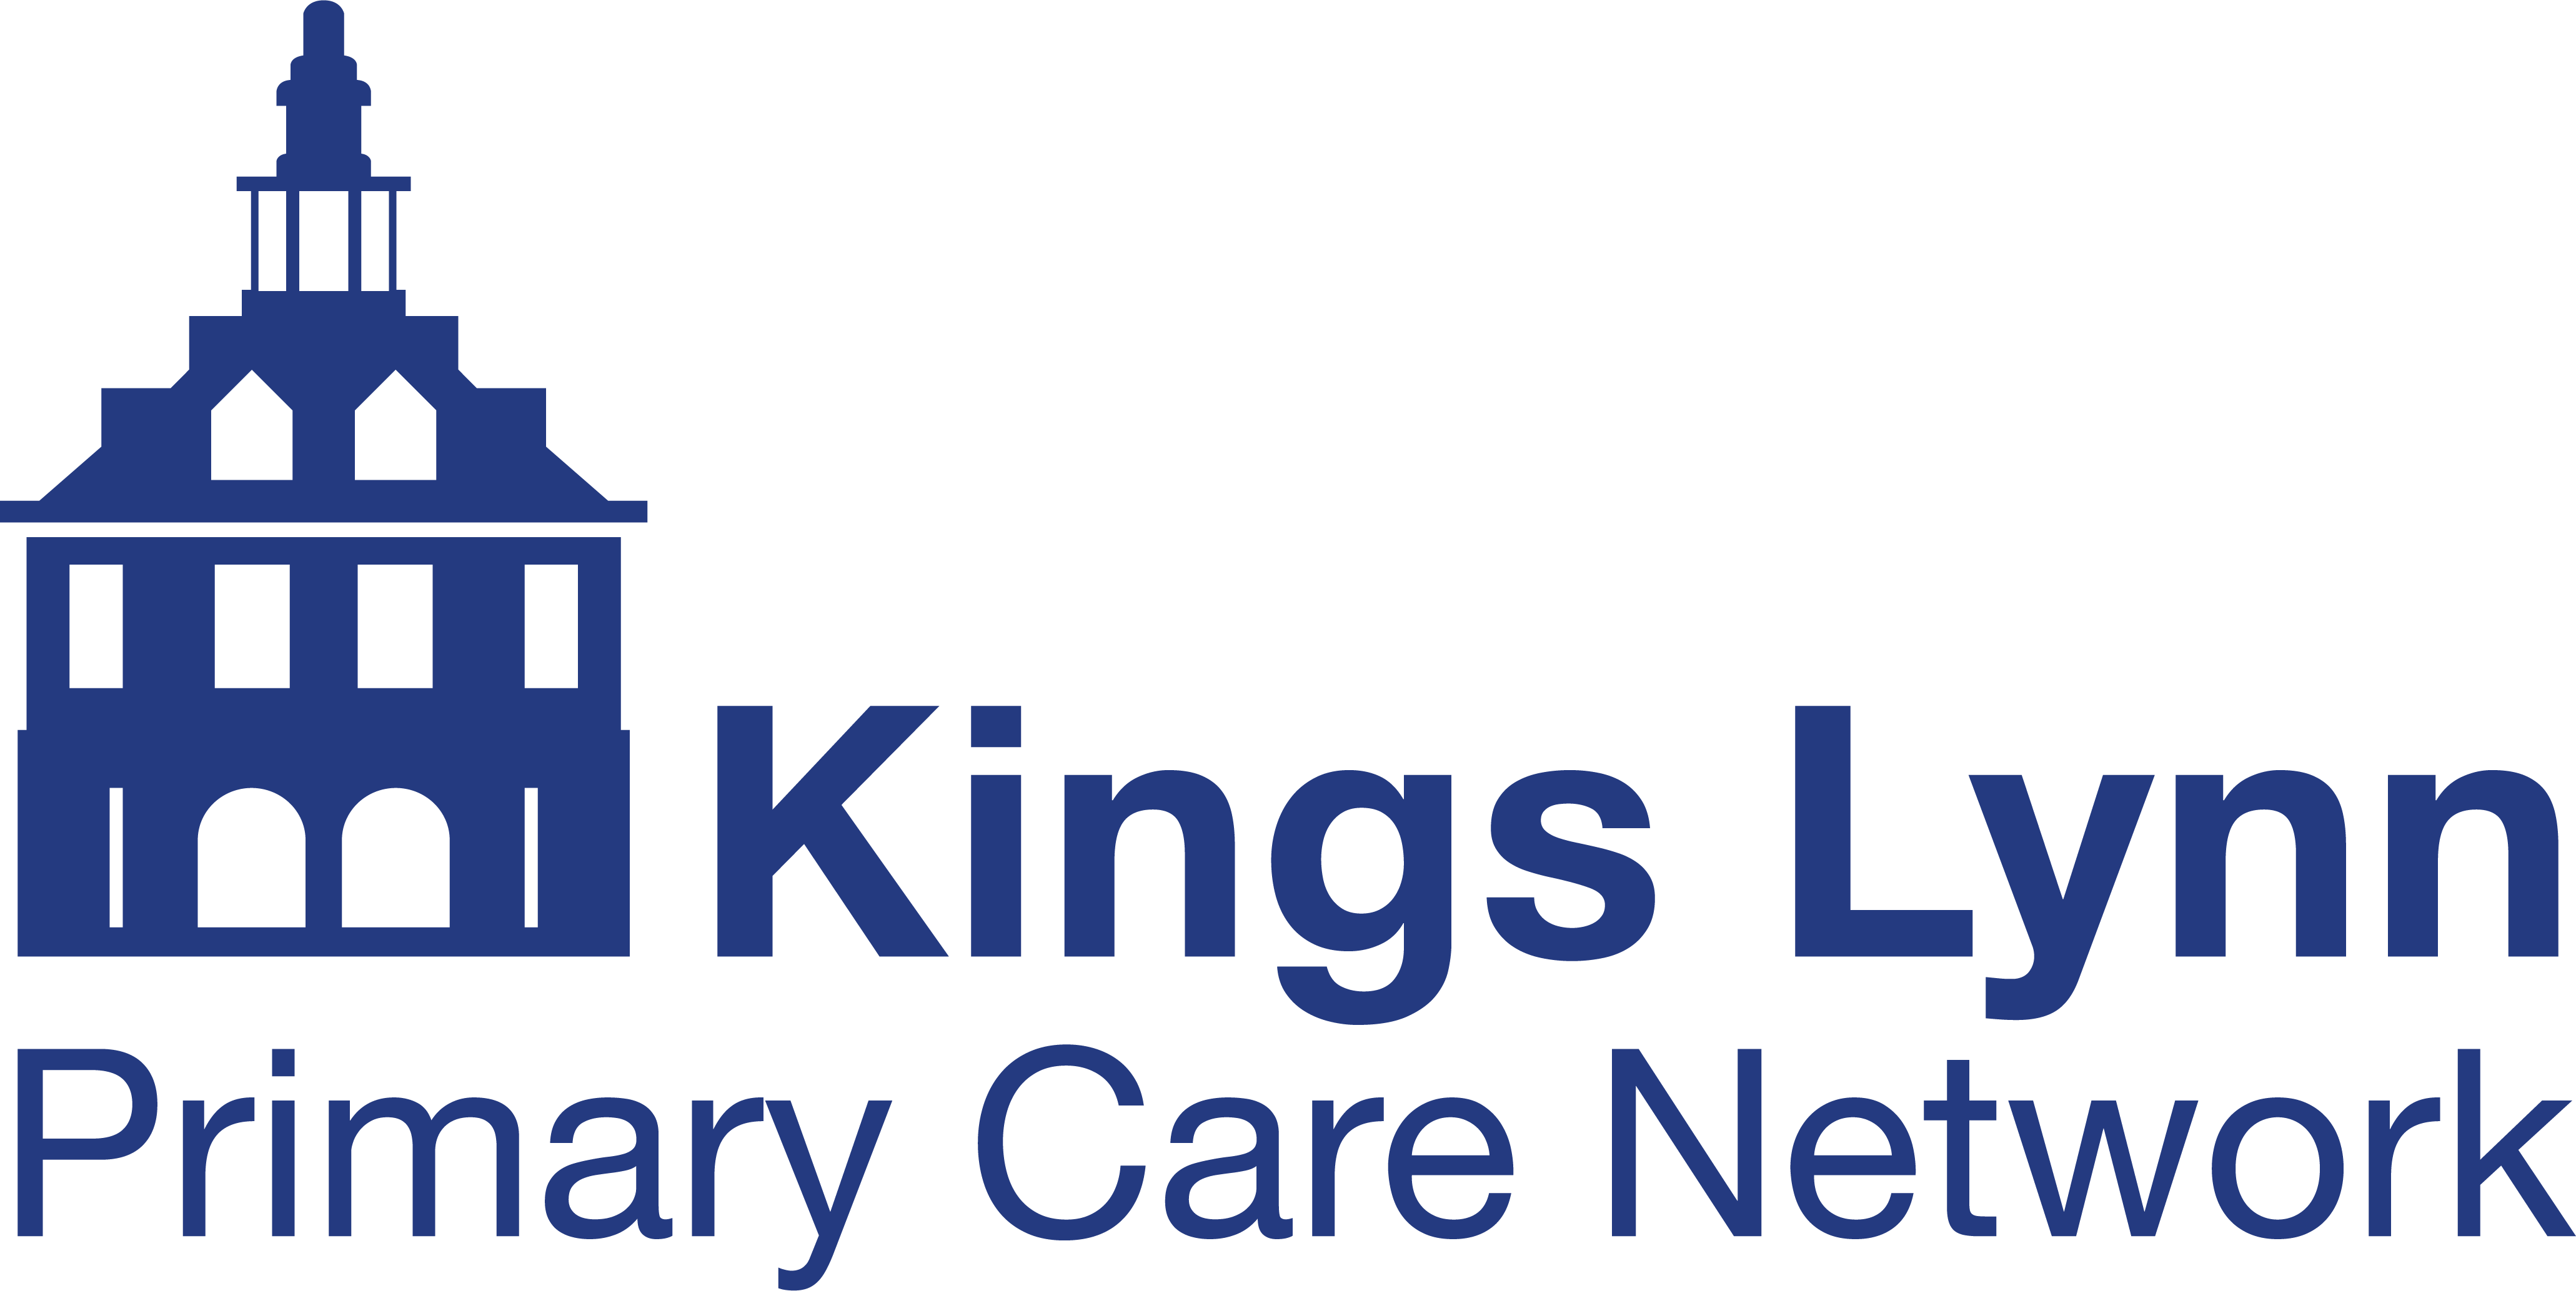 Kings Lynn Primary Care Network